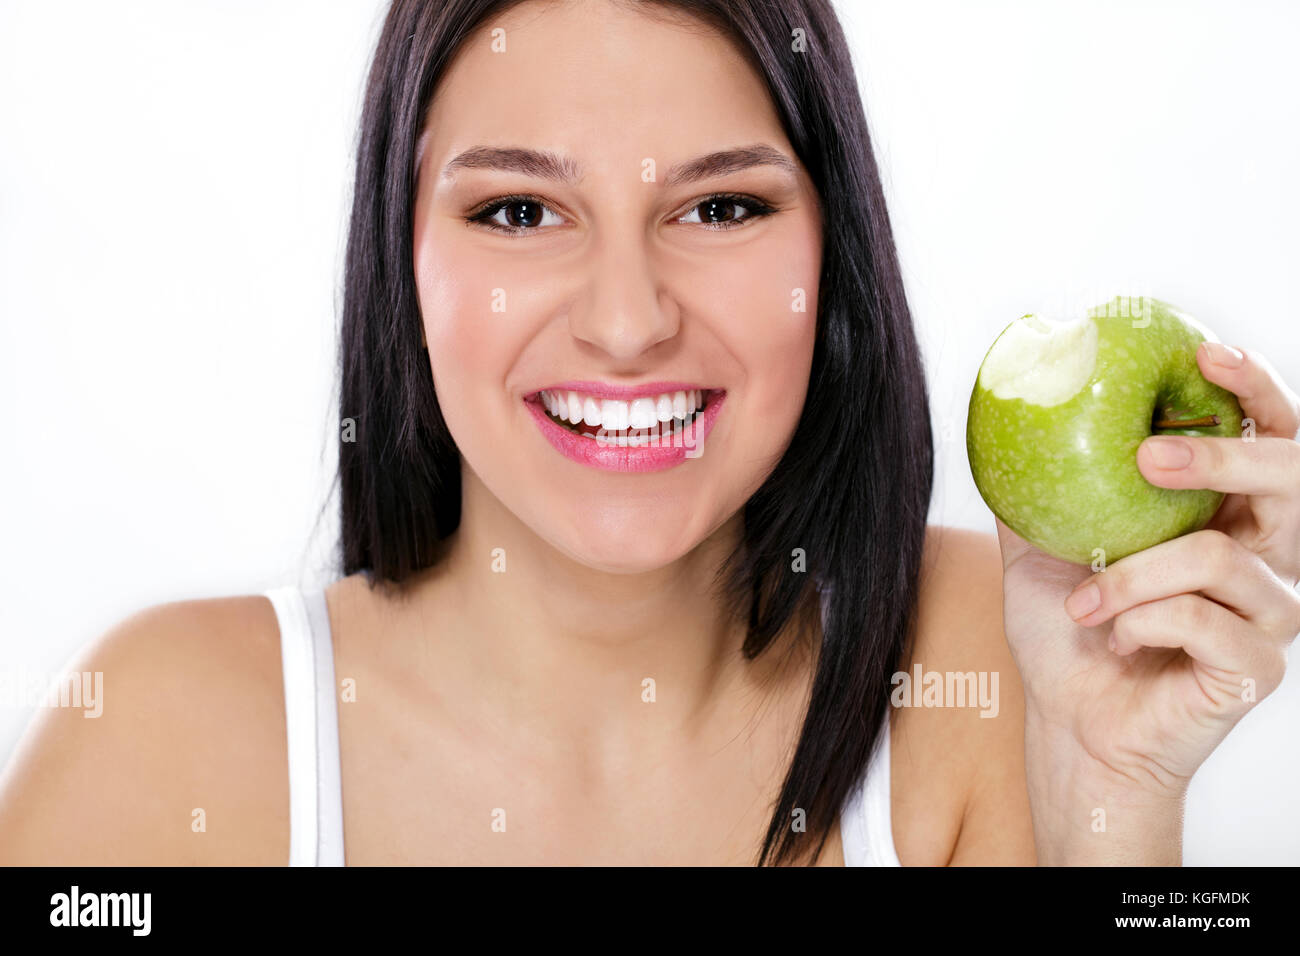 Felice giovane donna azienda verde mela con morso mancante Foto Stock